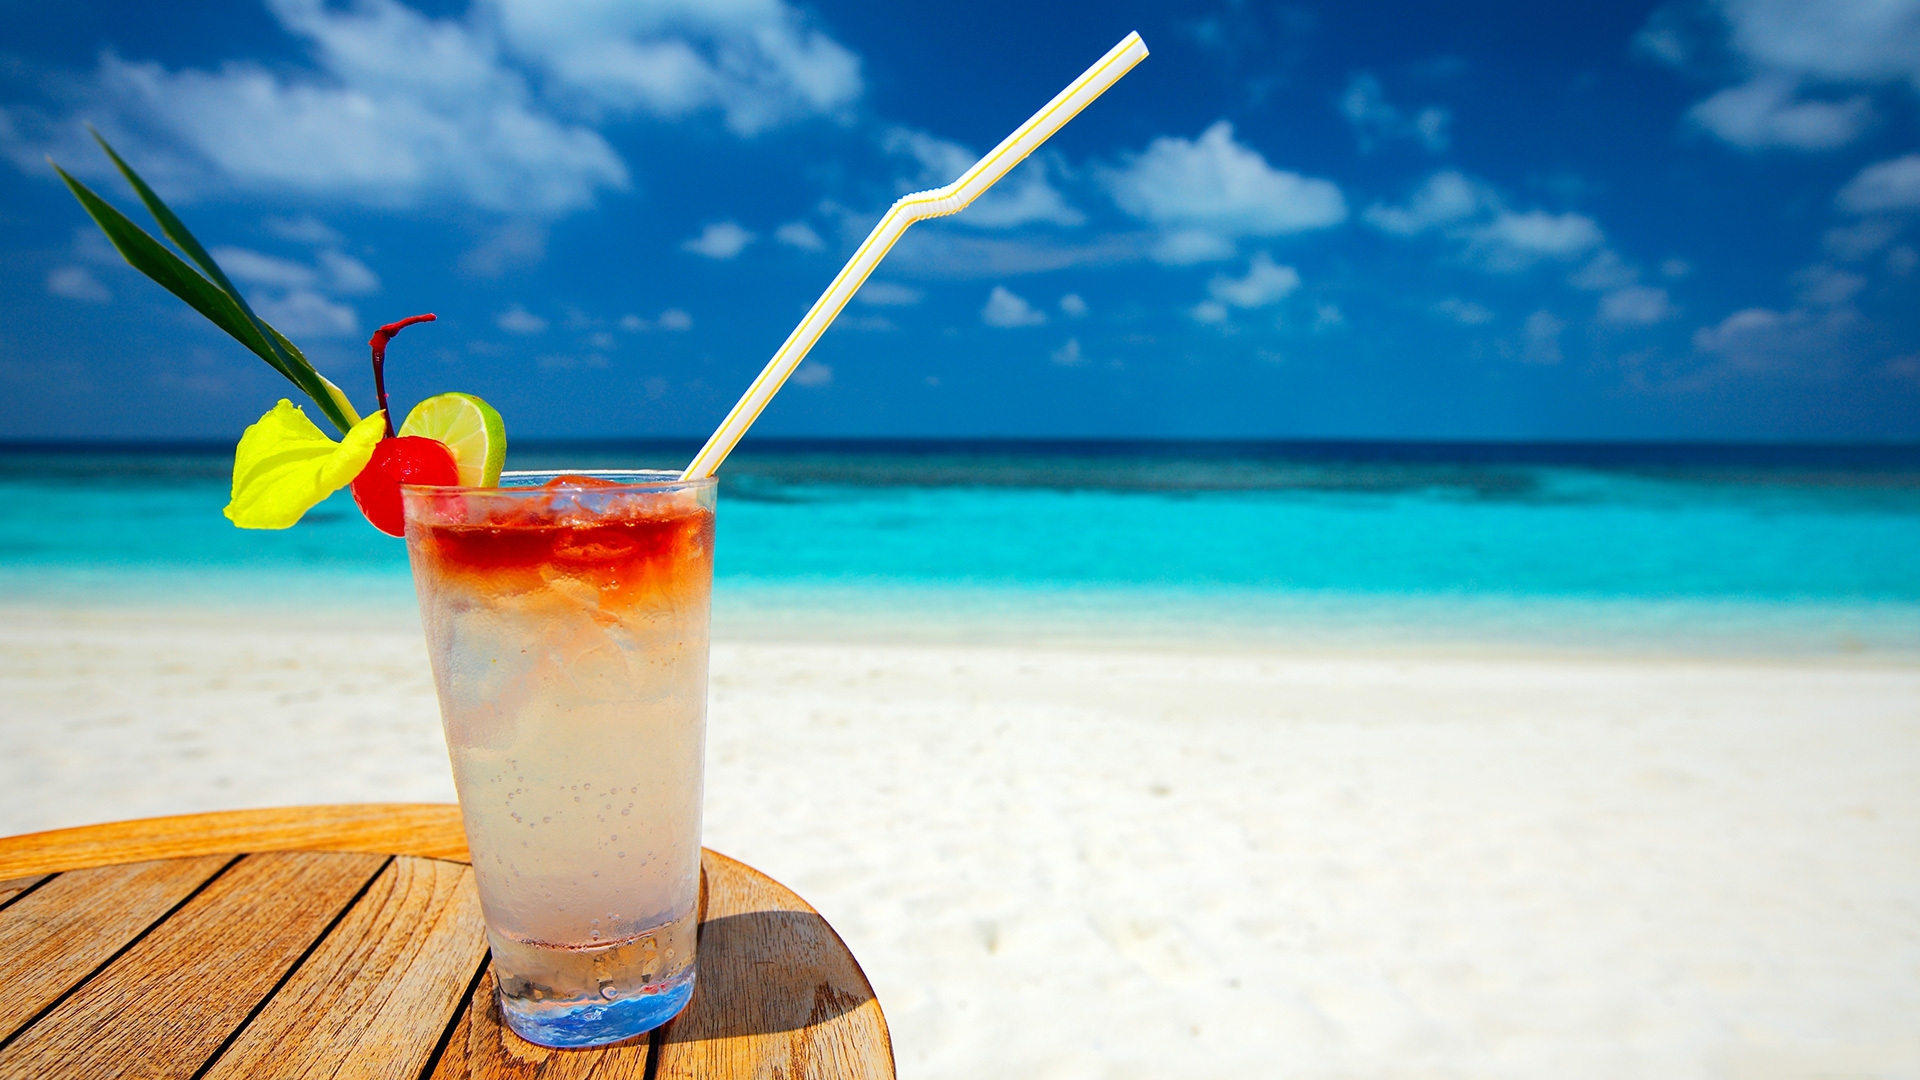 холодный коктейль, море, пляж HD фото картинки, обои рабочий стол